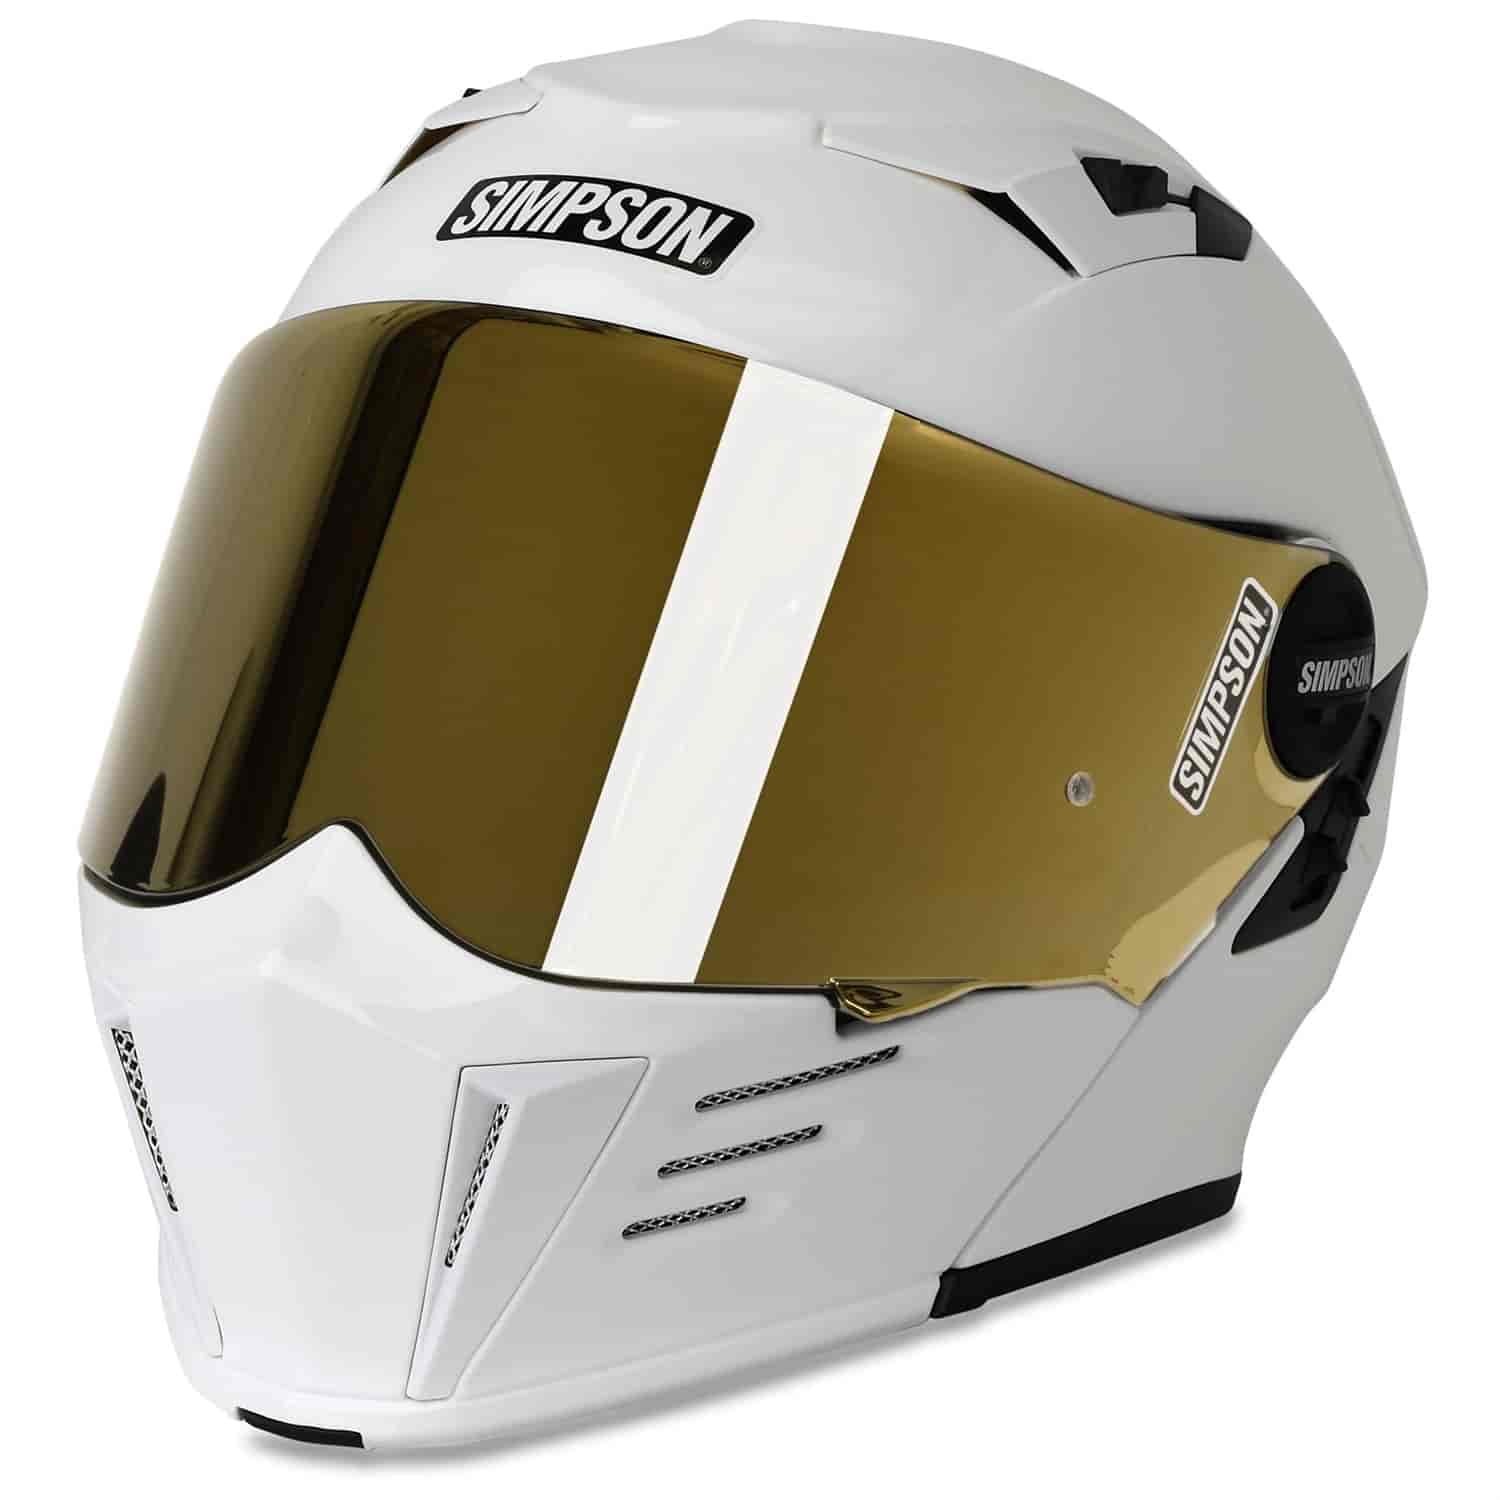 Simpson Mod Bandit Modular Motorcycle Helmets